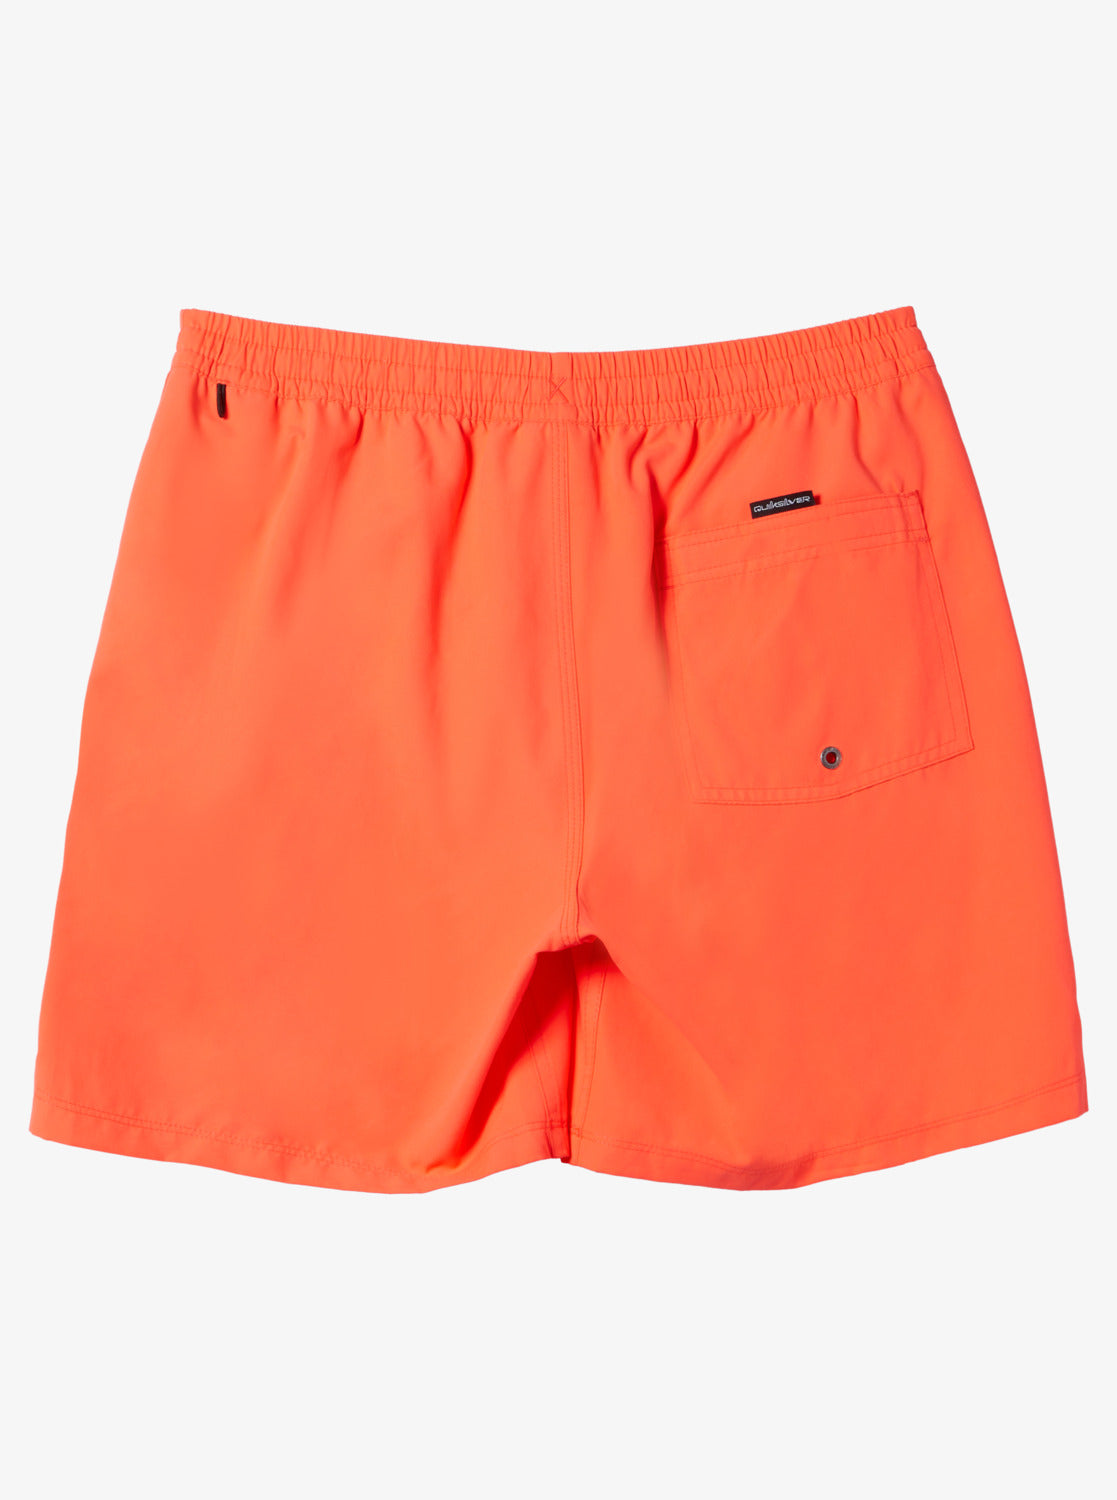 Crivit Men's Swim Trunks Shorts elastic waist Orange lined with pockets  size M